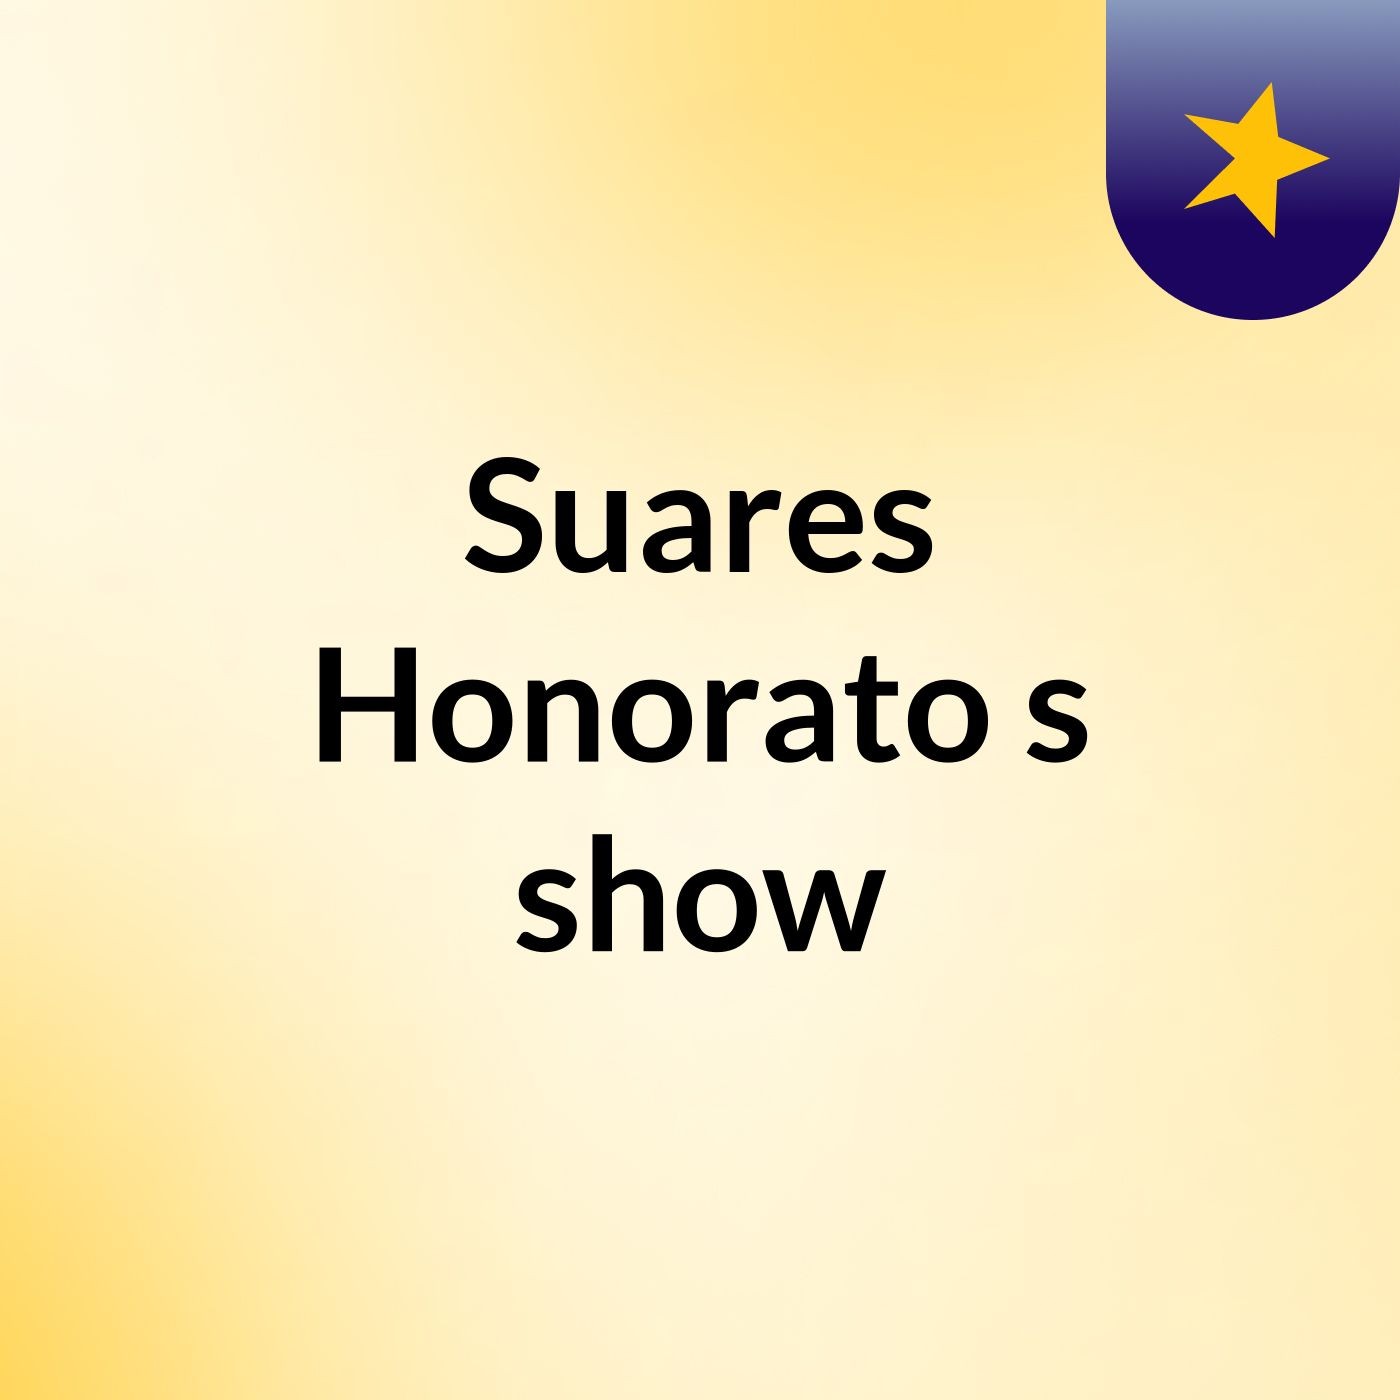 Suares Honorato's show